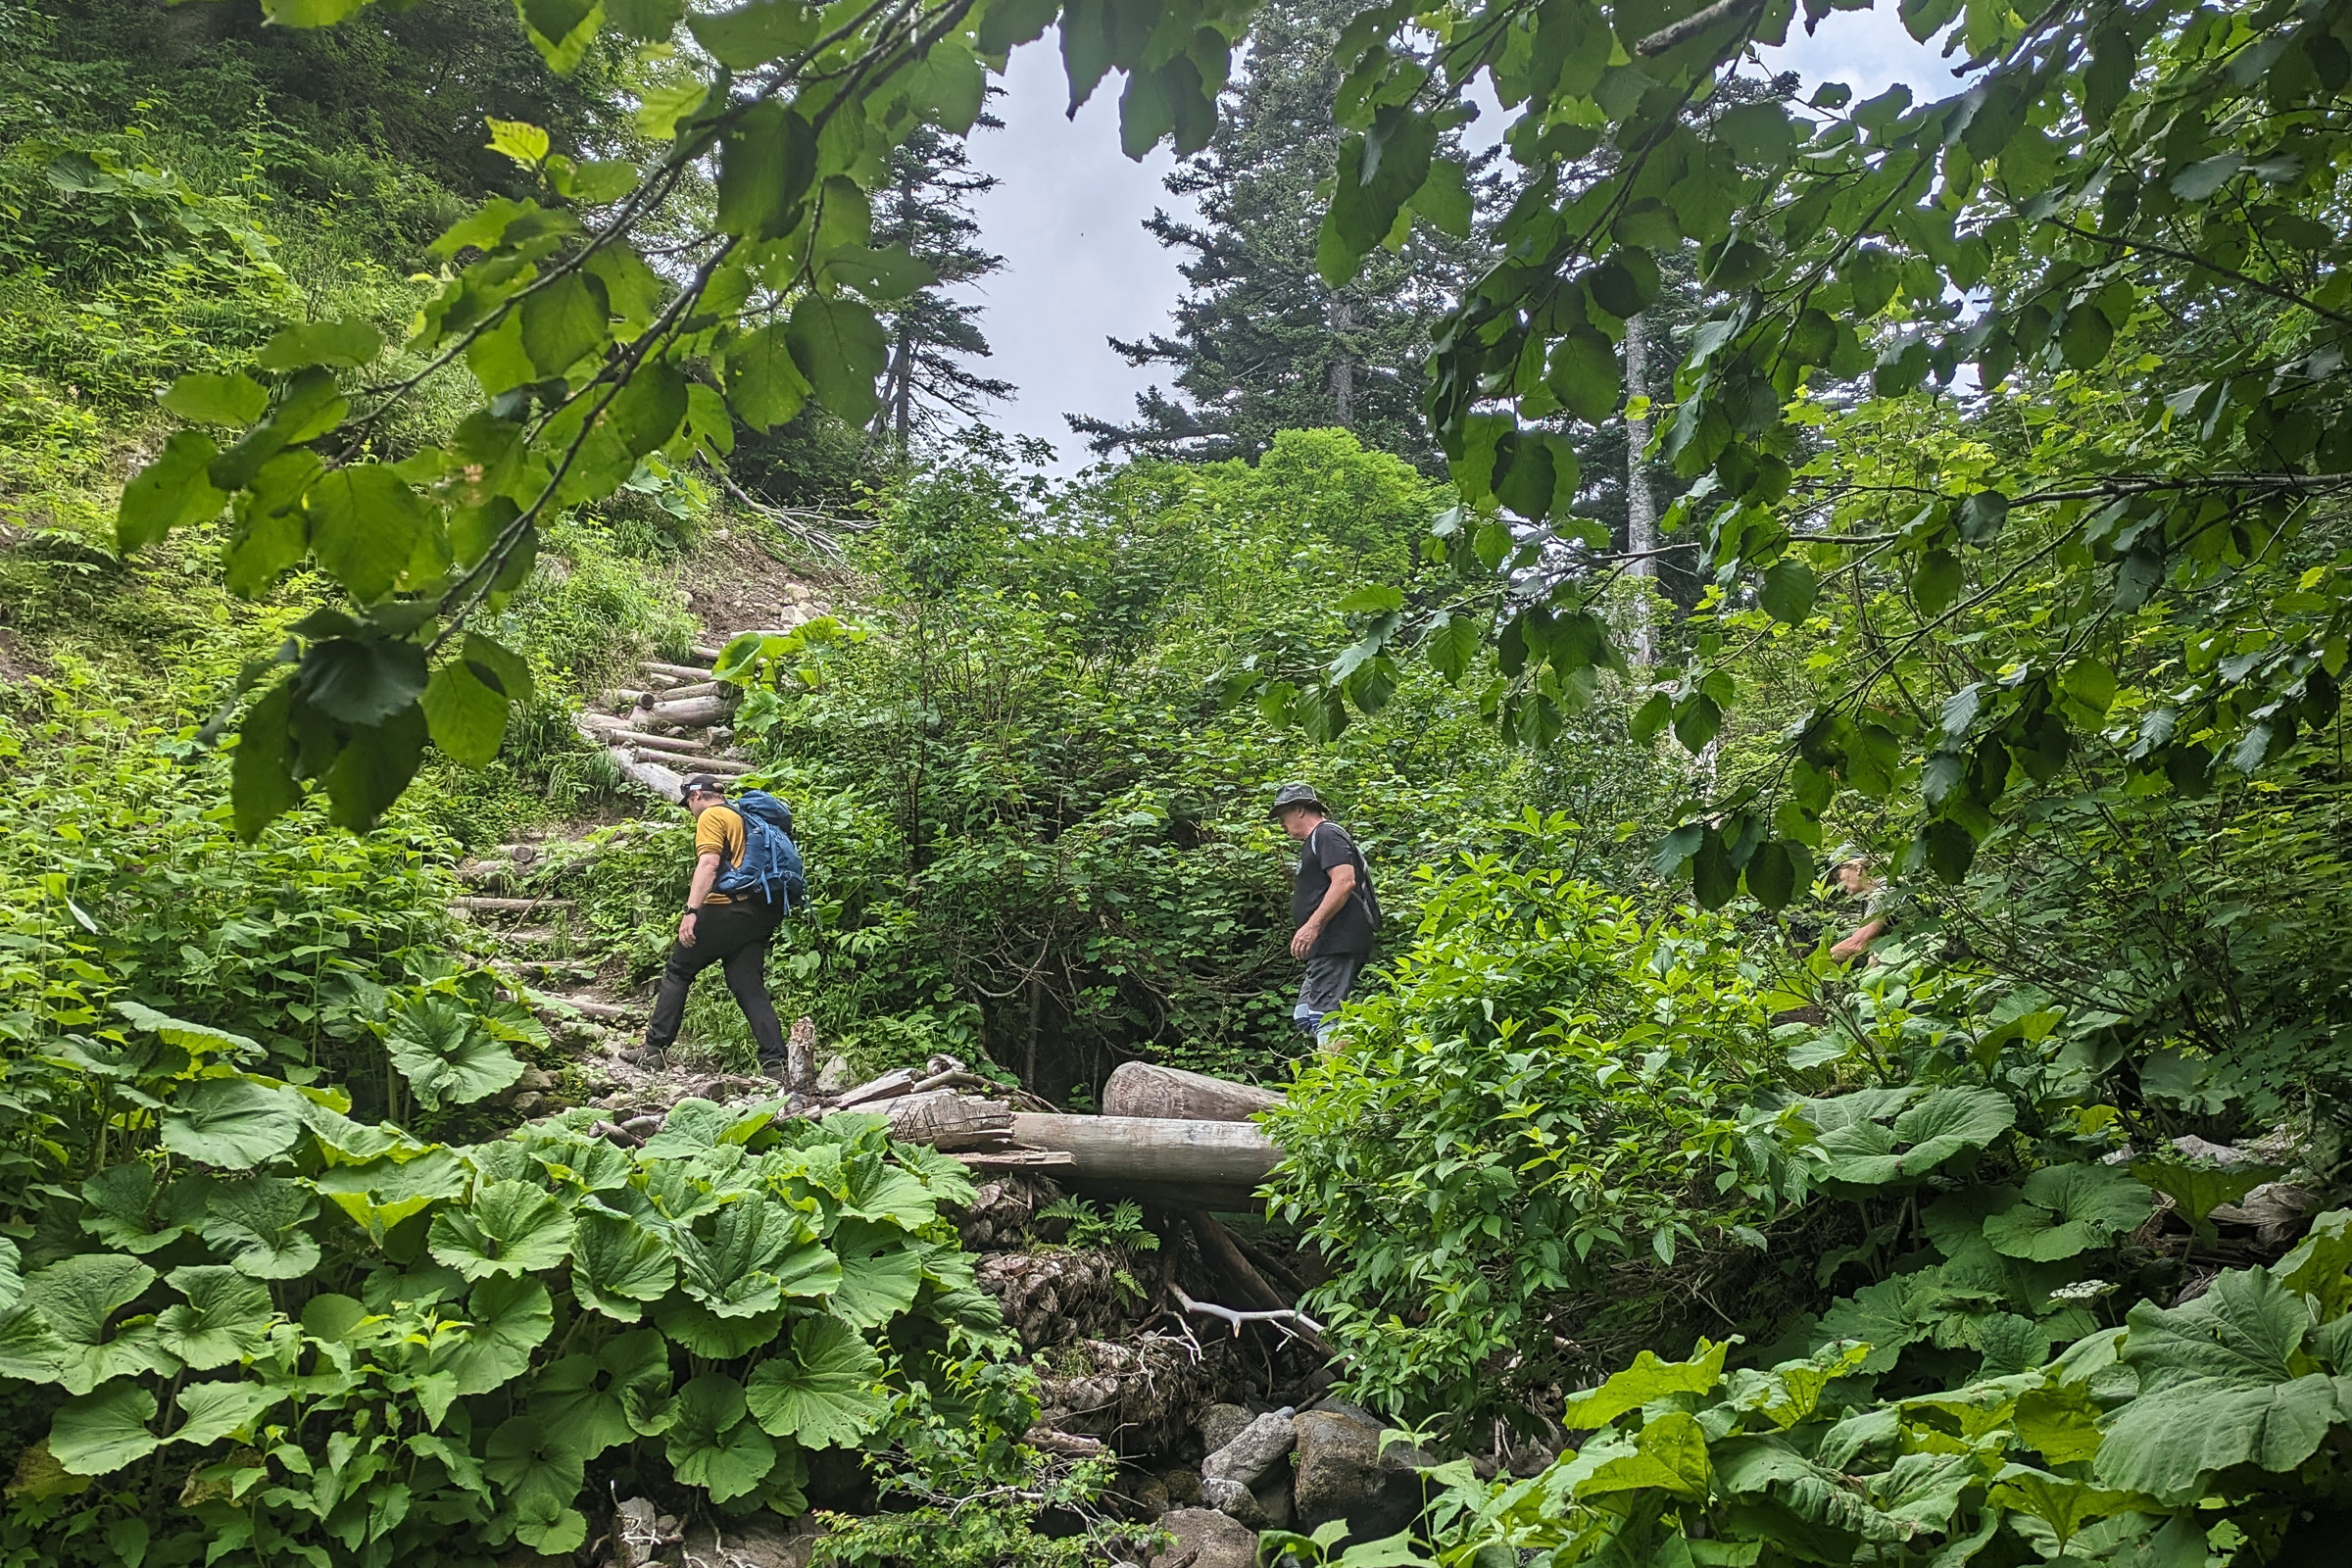 Two hikers cross a log bridge over a leafy stream in Daisetsu Kogen.